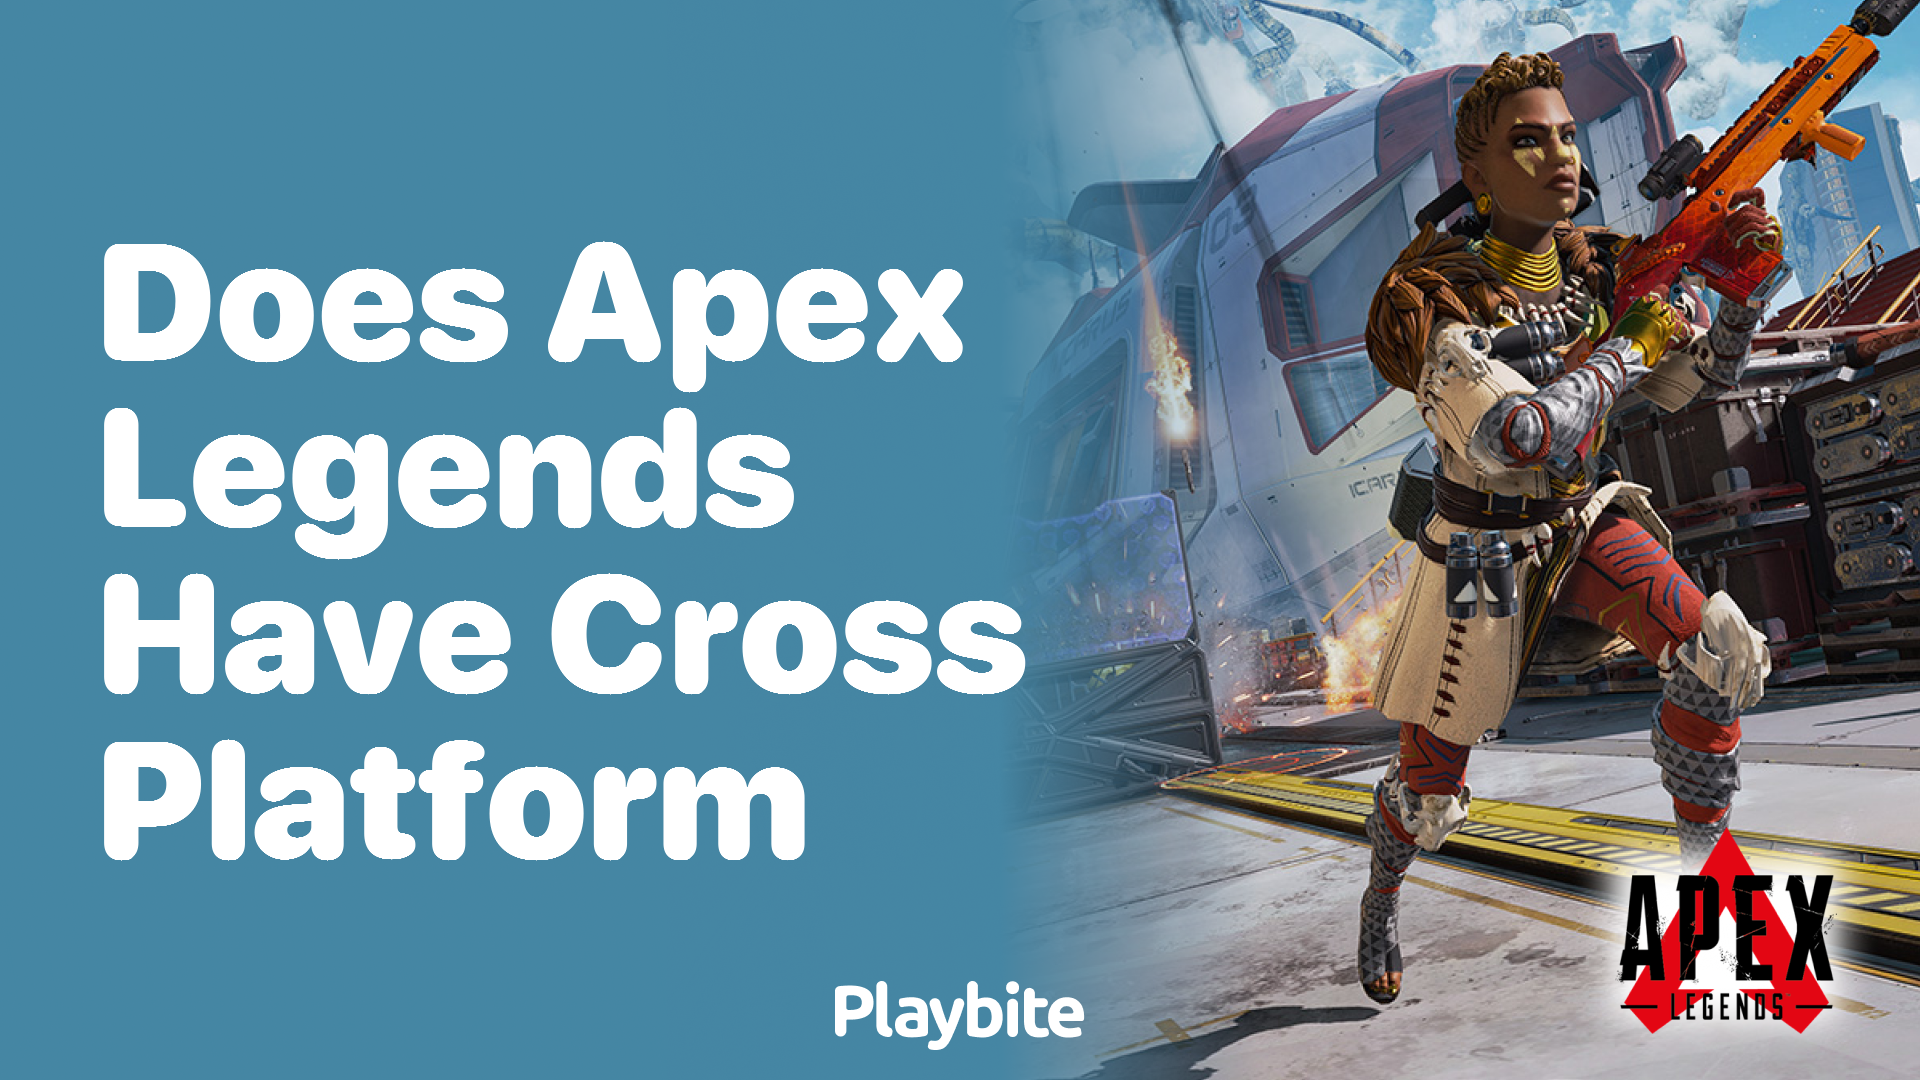 Does Apex Legends have cross-platform play?